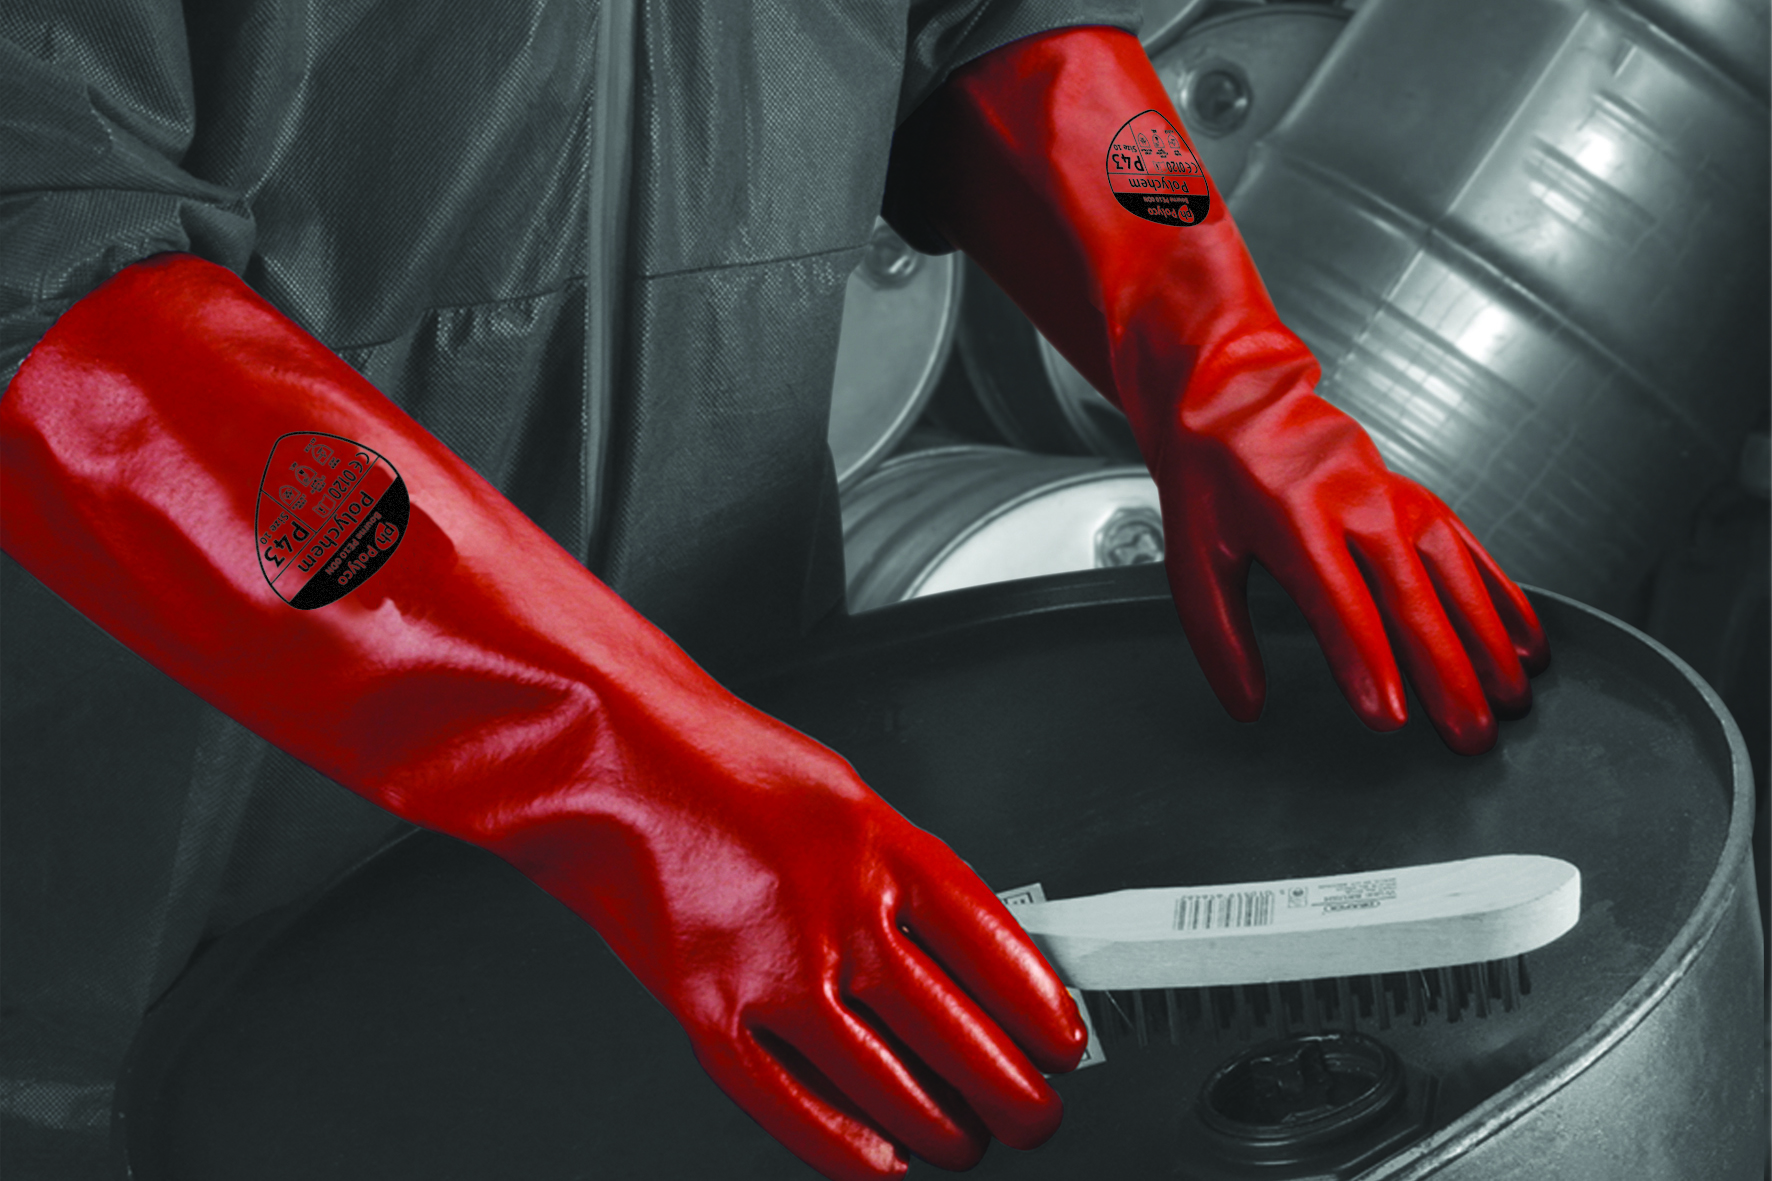 Polychem Chemical Gauntlet Gloves